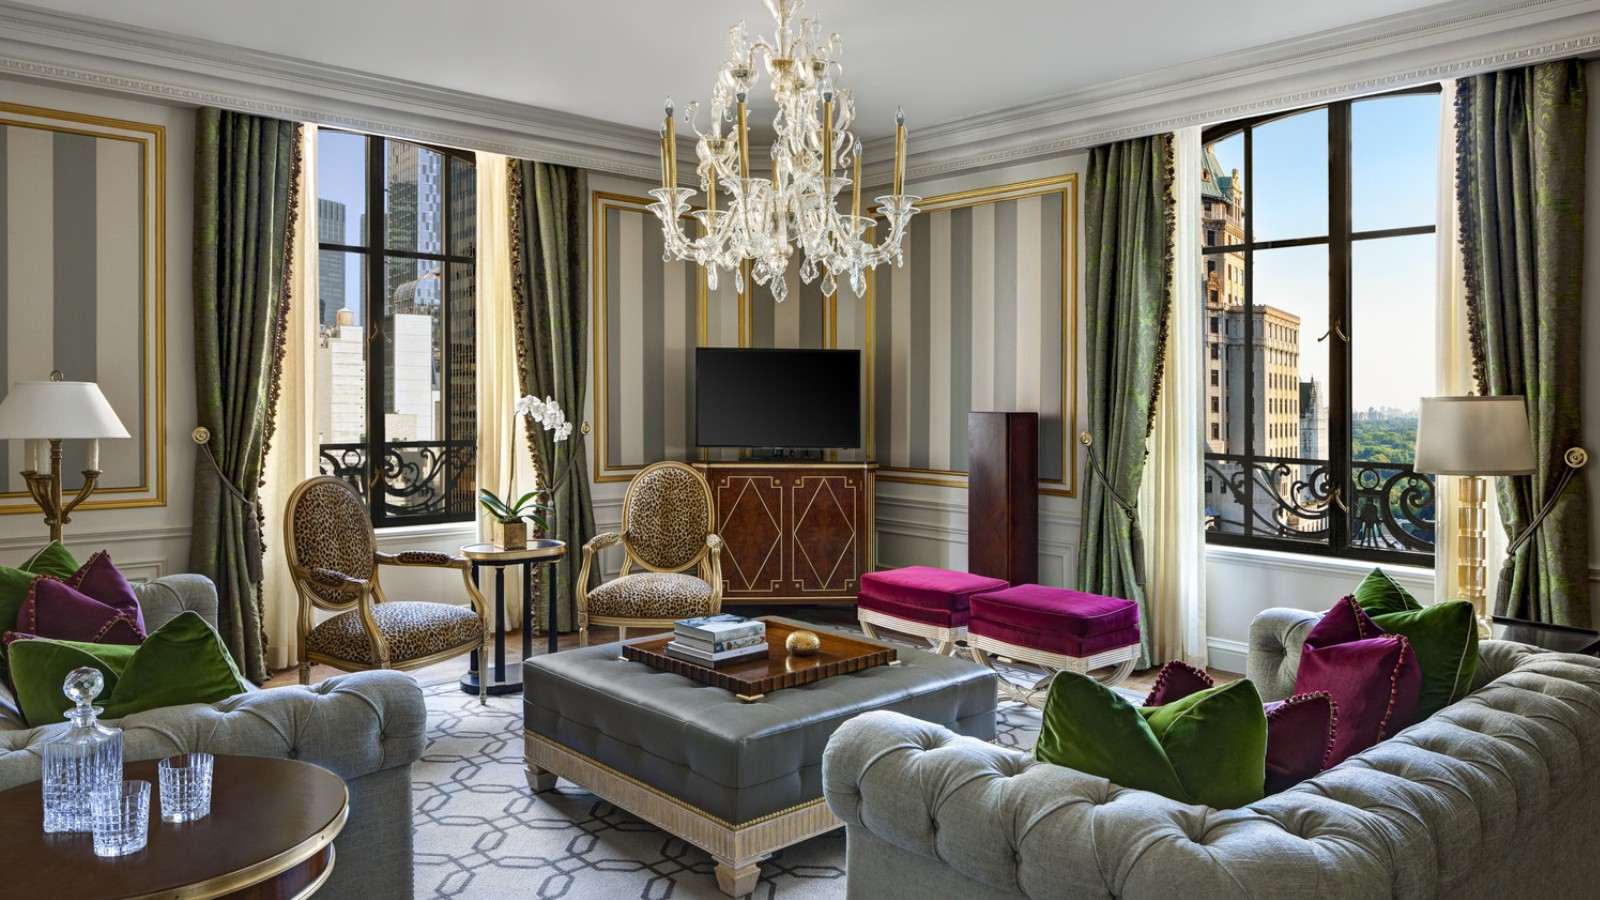 7 Most Fabulous Hotels & Suites Designed By Fashion Designer